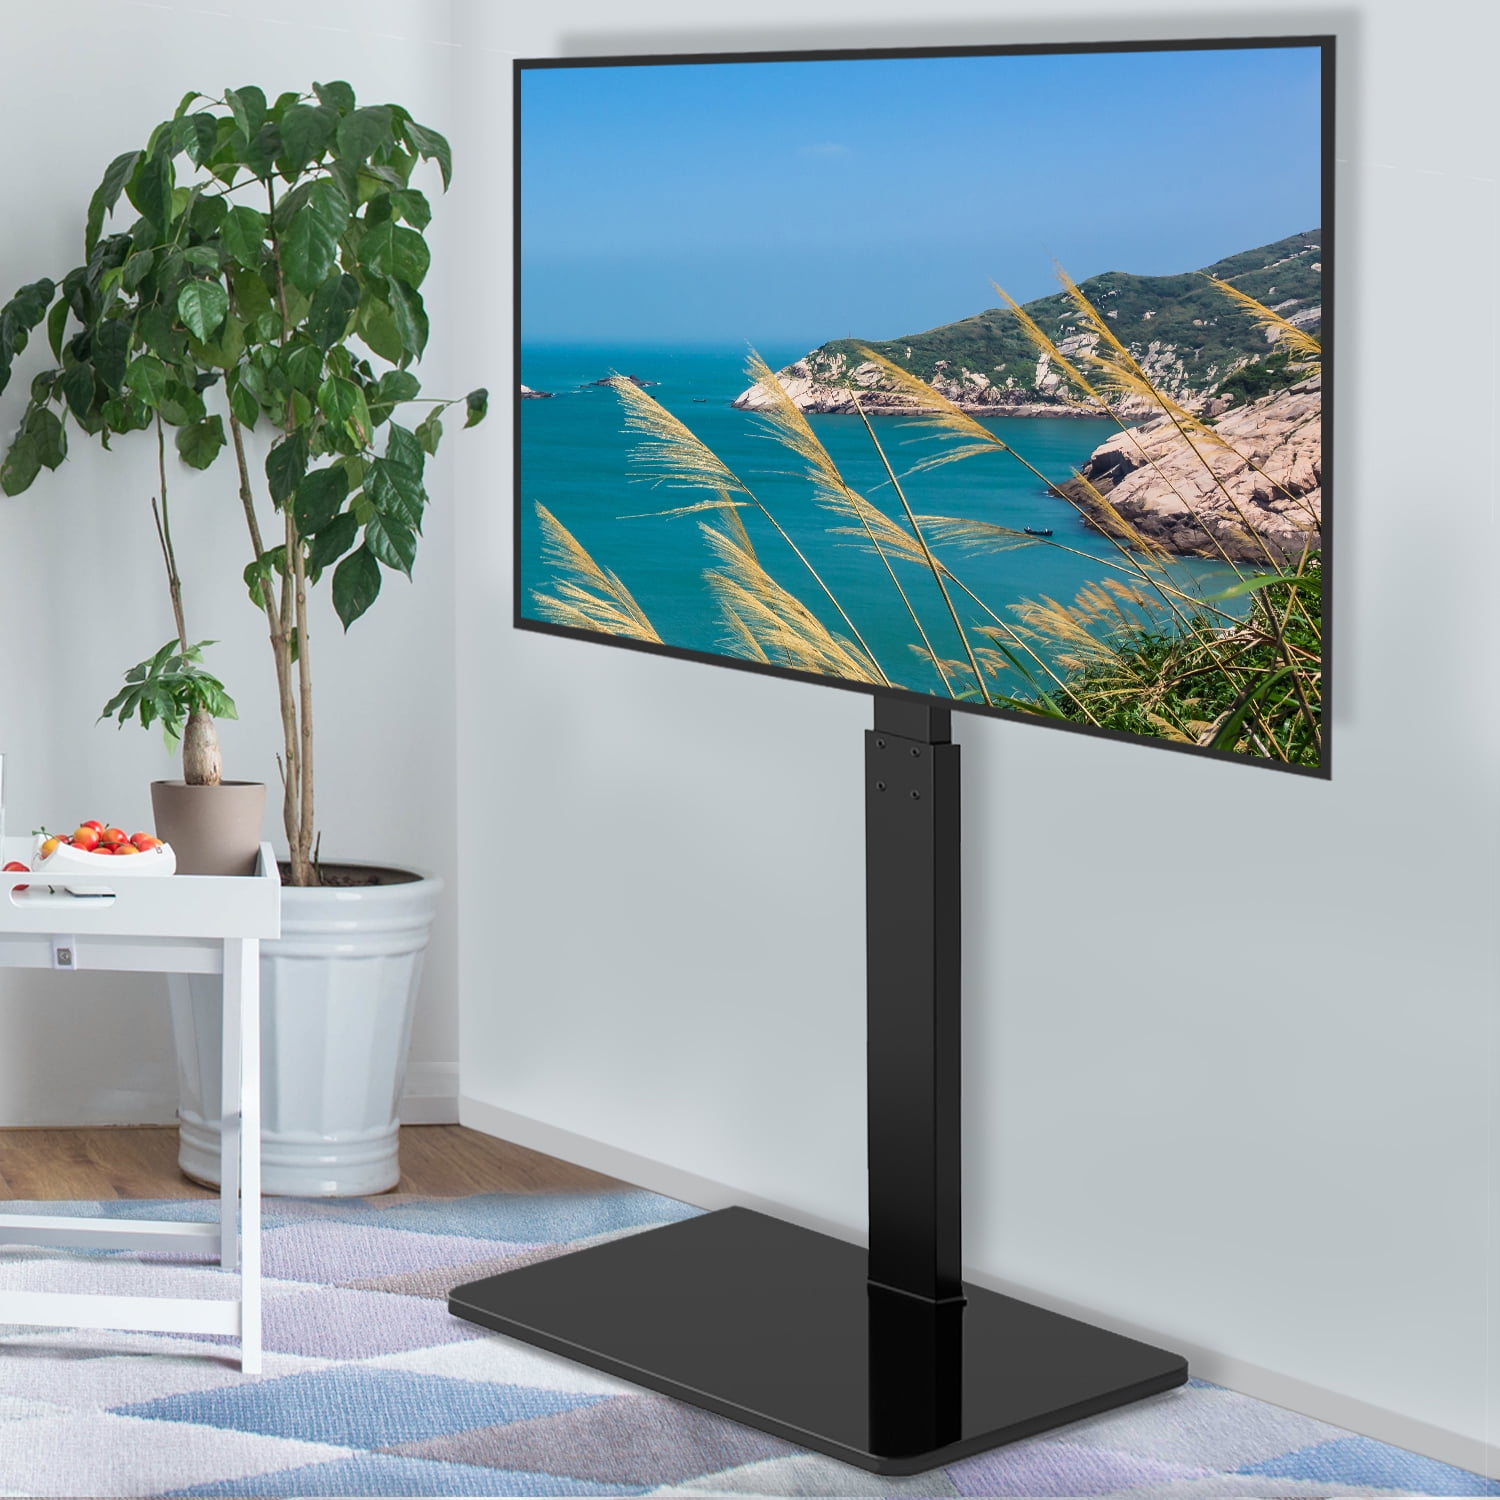 Leadzm TSG003 UBesGoo Floor TV Stand Mount Black for sale online 